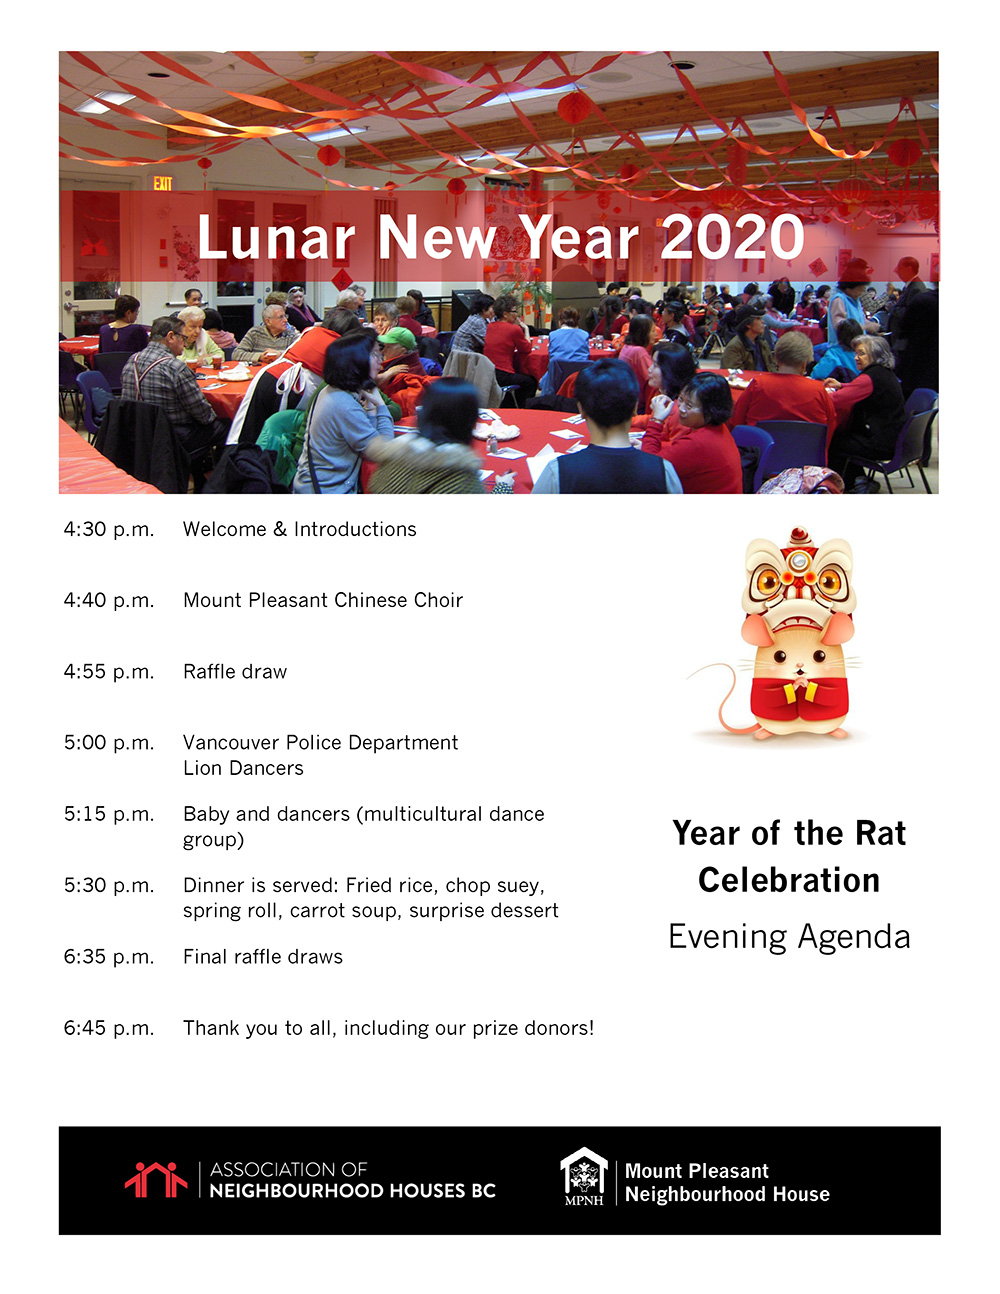 Agenda for the Lunar New Year Celebration 2020